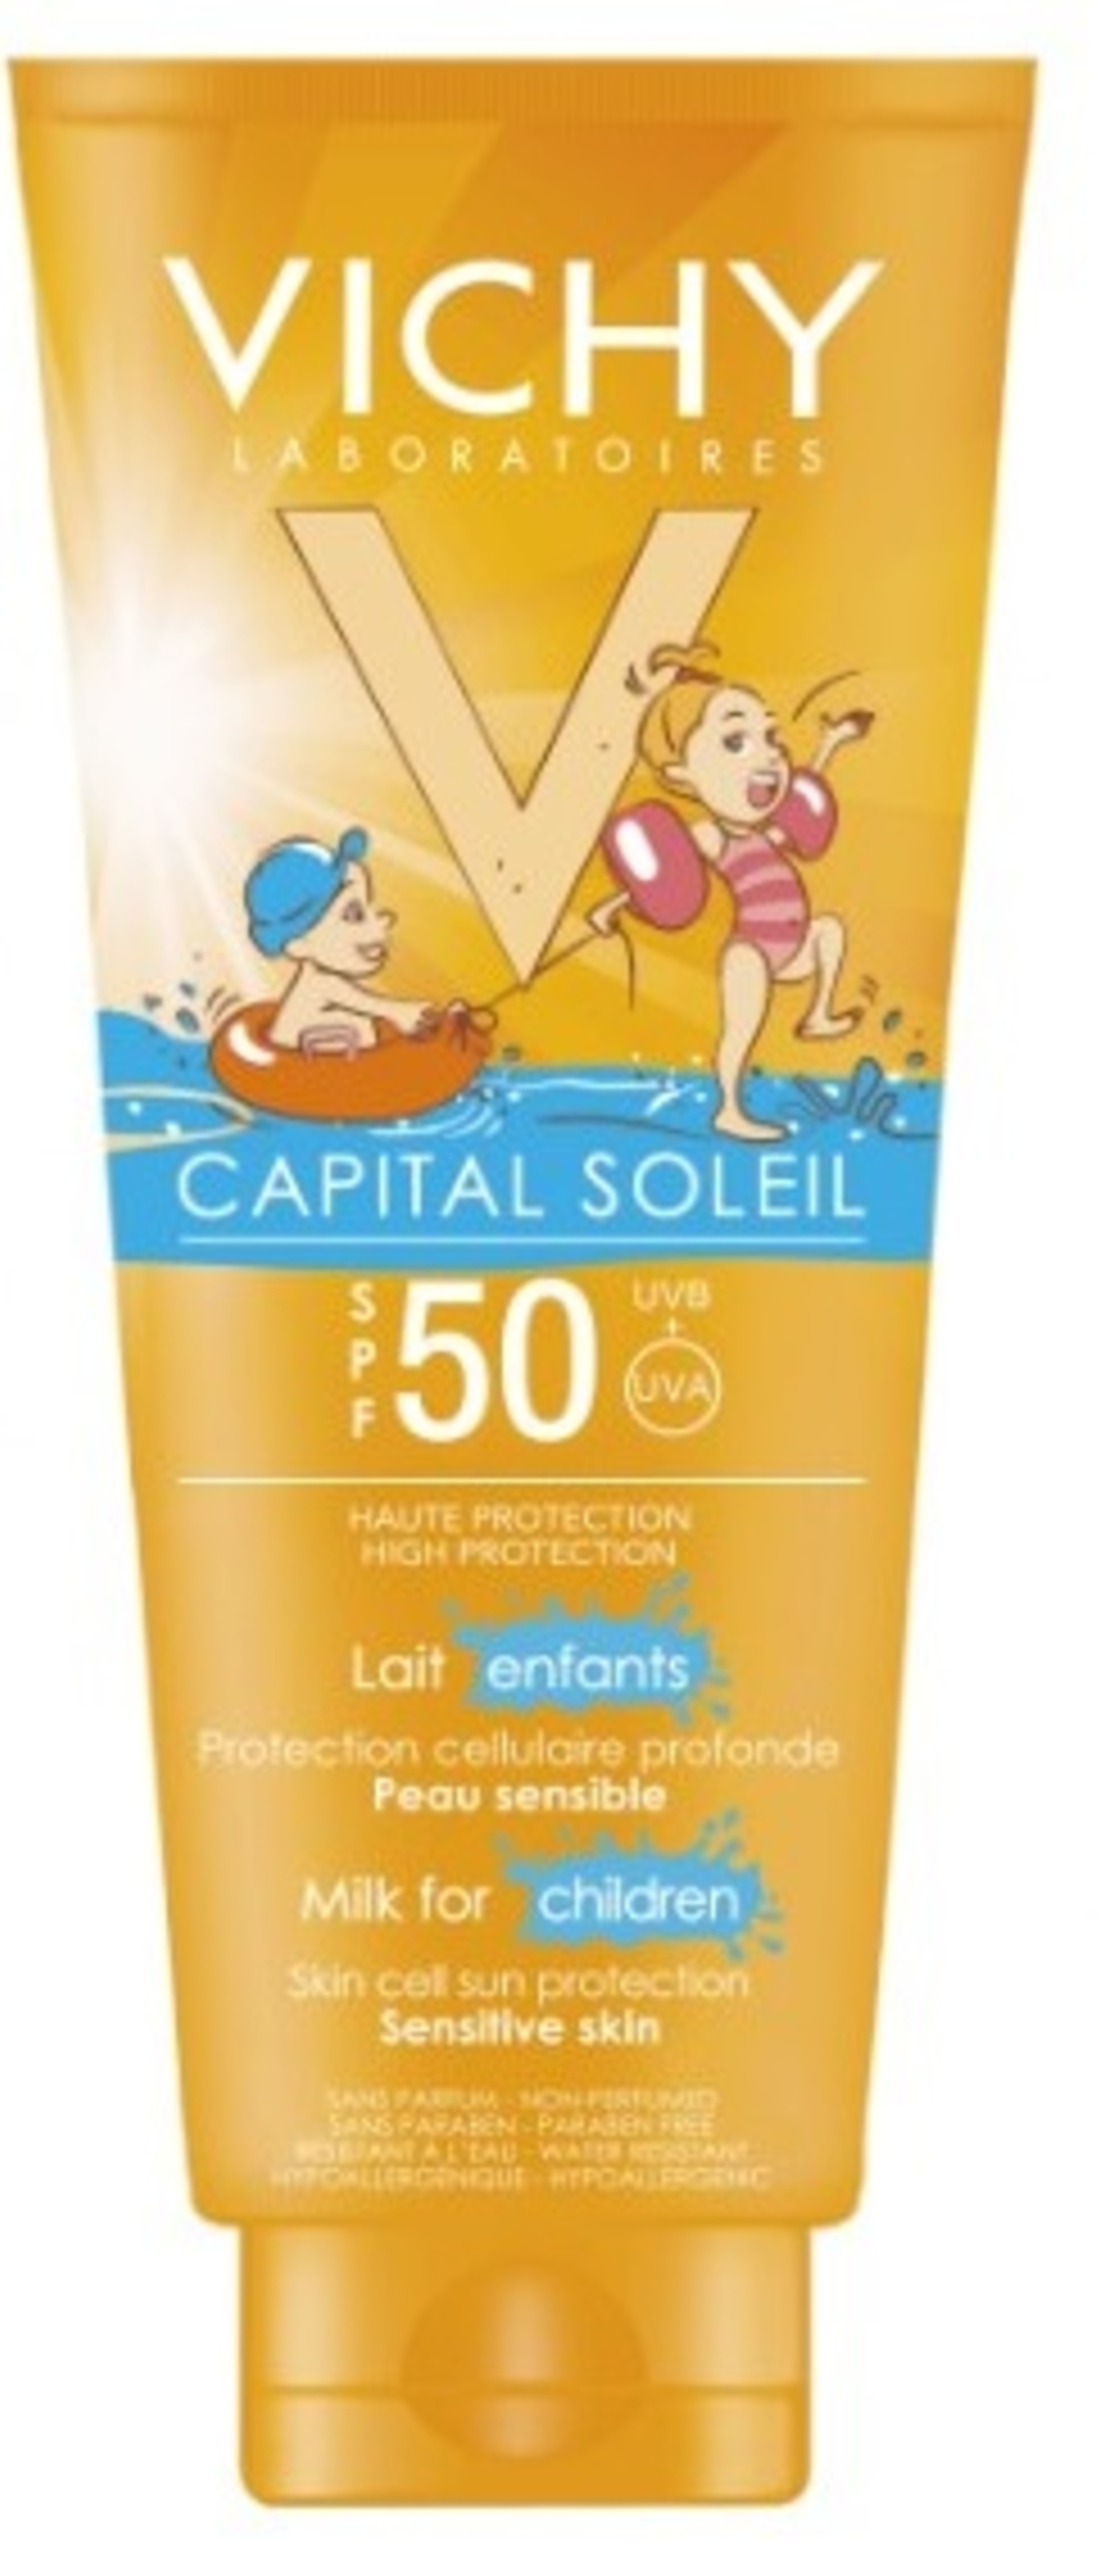 וישי - אידיאל סוליי קרם לילדים Vichy Ideal Soleil SPF50+ Milk for Children